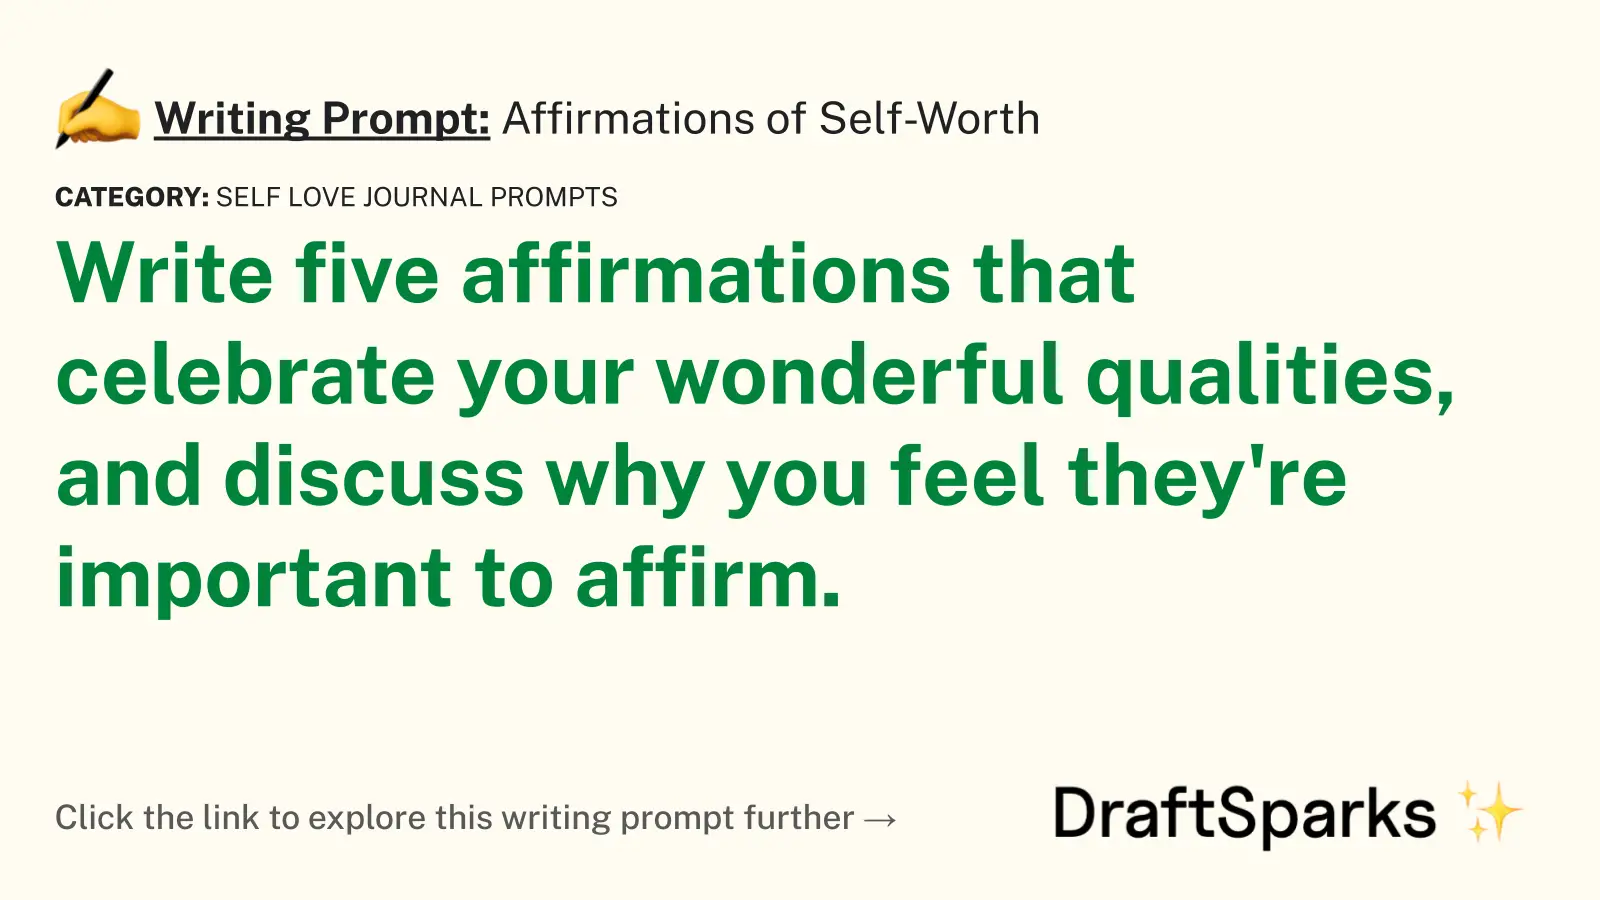 Affirmations of Self-Worth